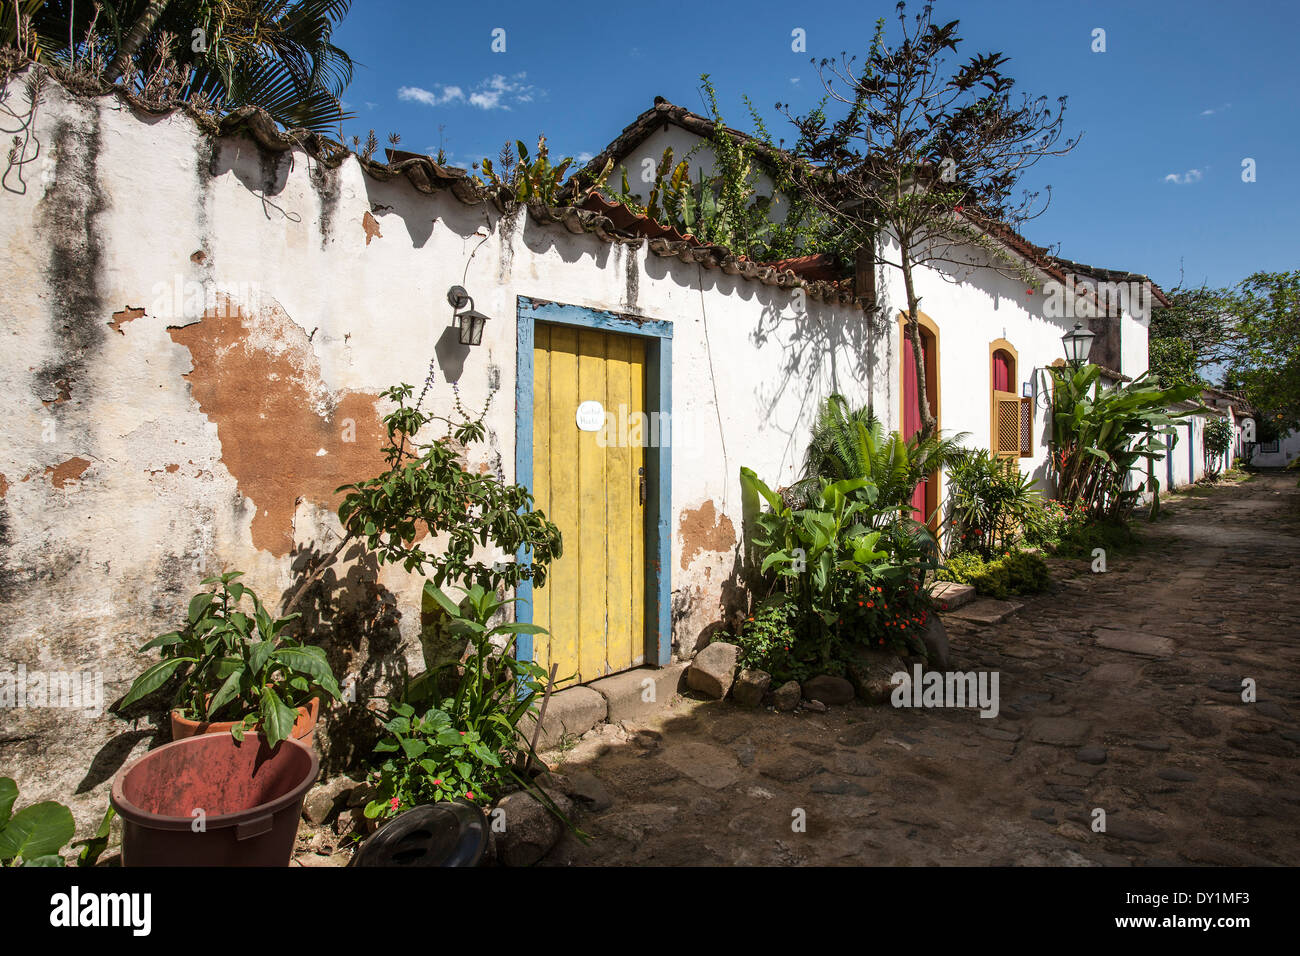 Paraty, colonial town, typical colonial houses, plants, Rio de Janeiro, Costa Verde, Brazil Stock Photo